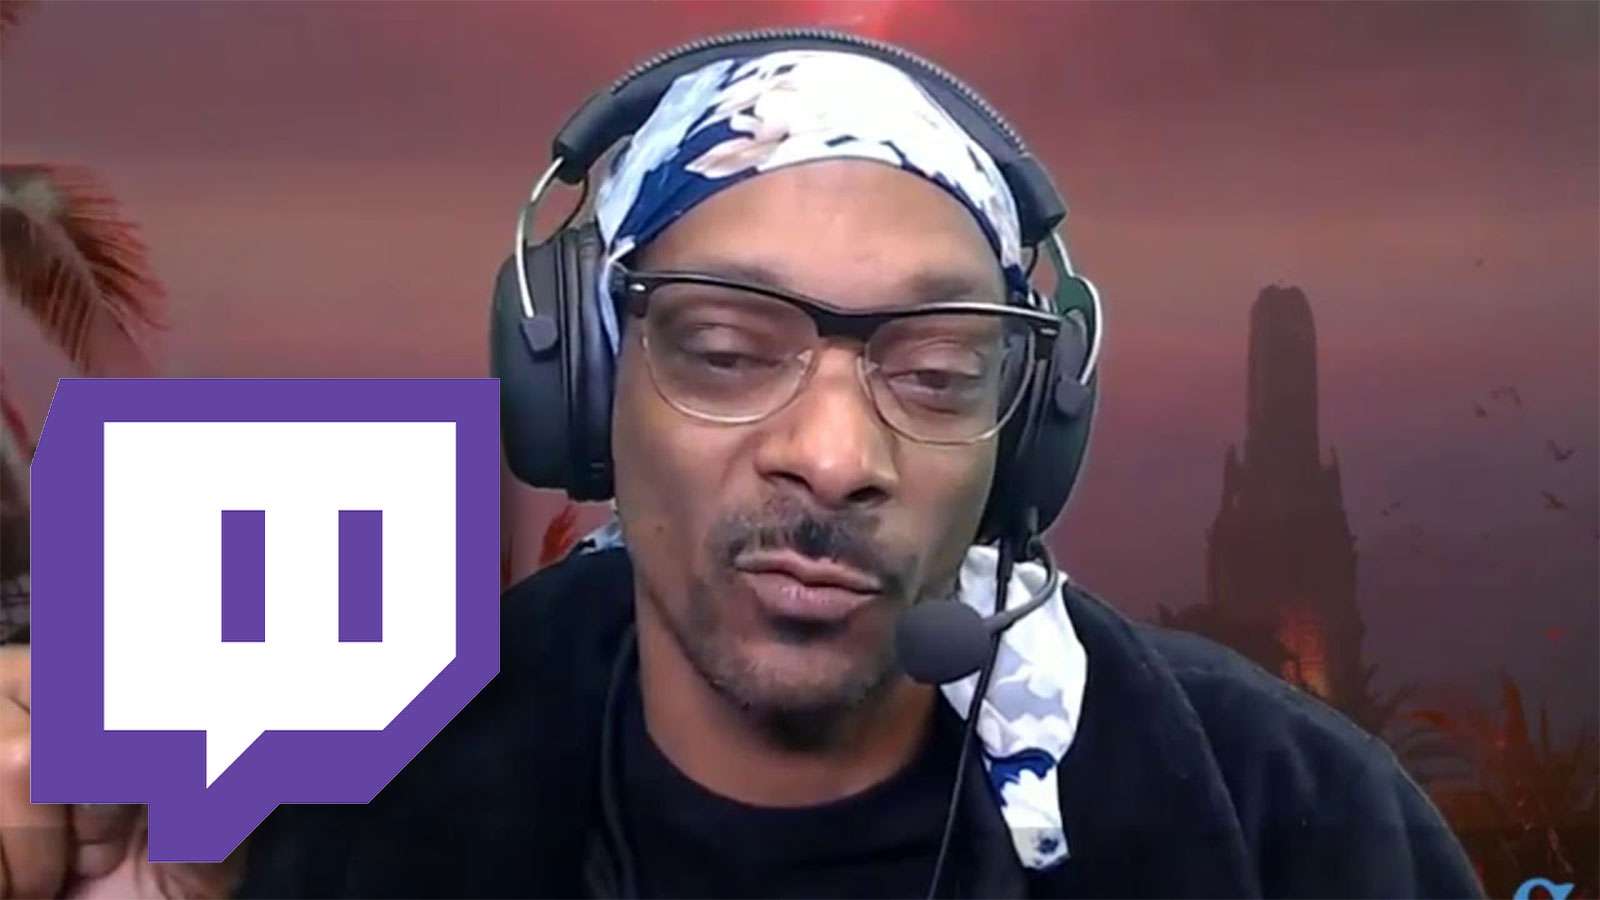 Snoop Dogg on twitch.com